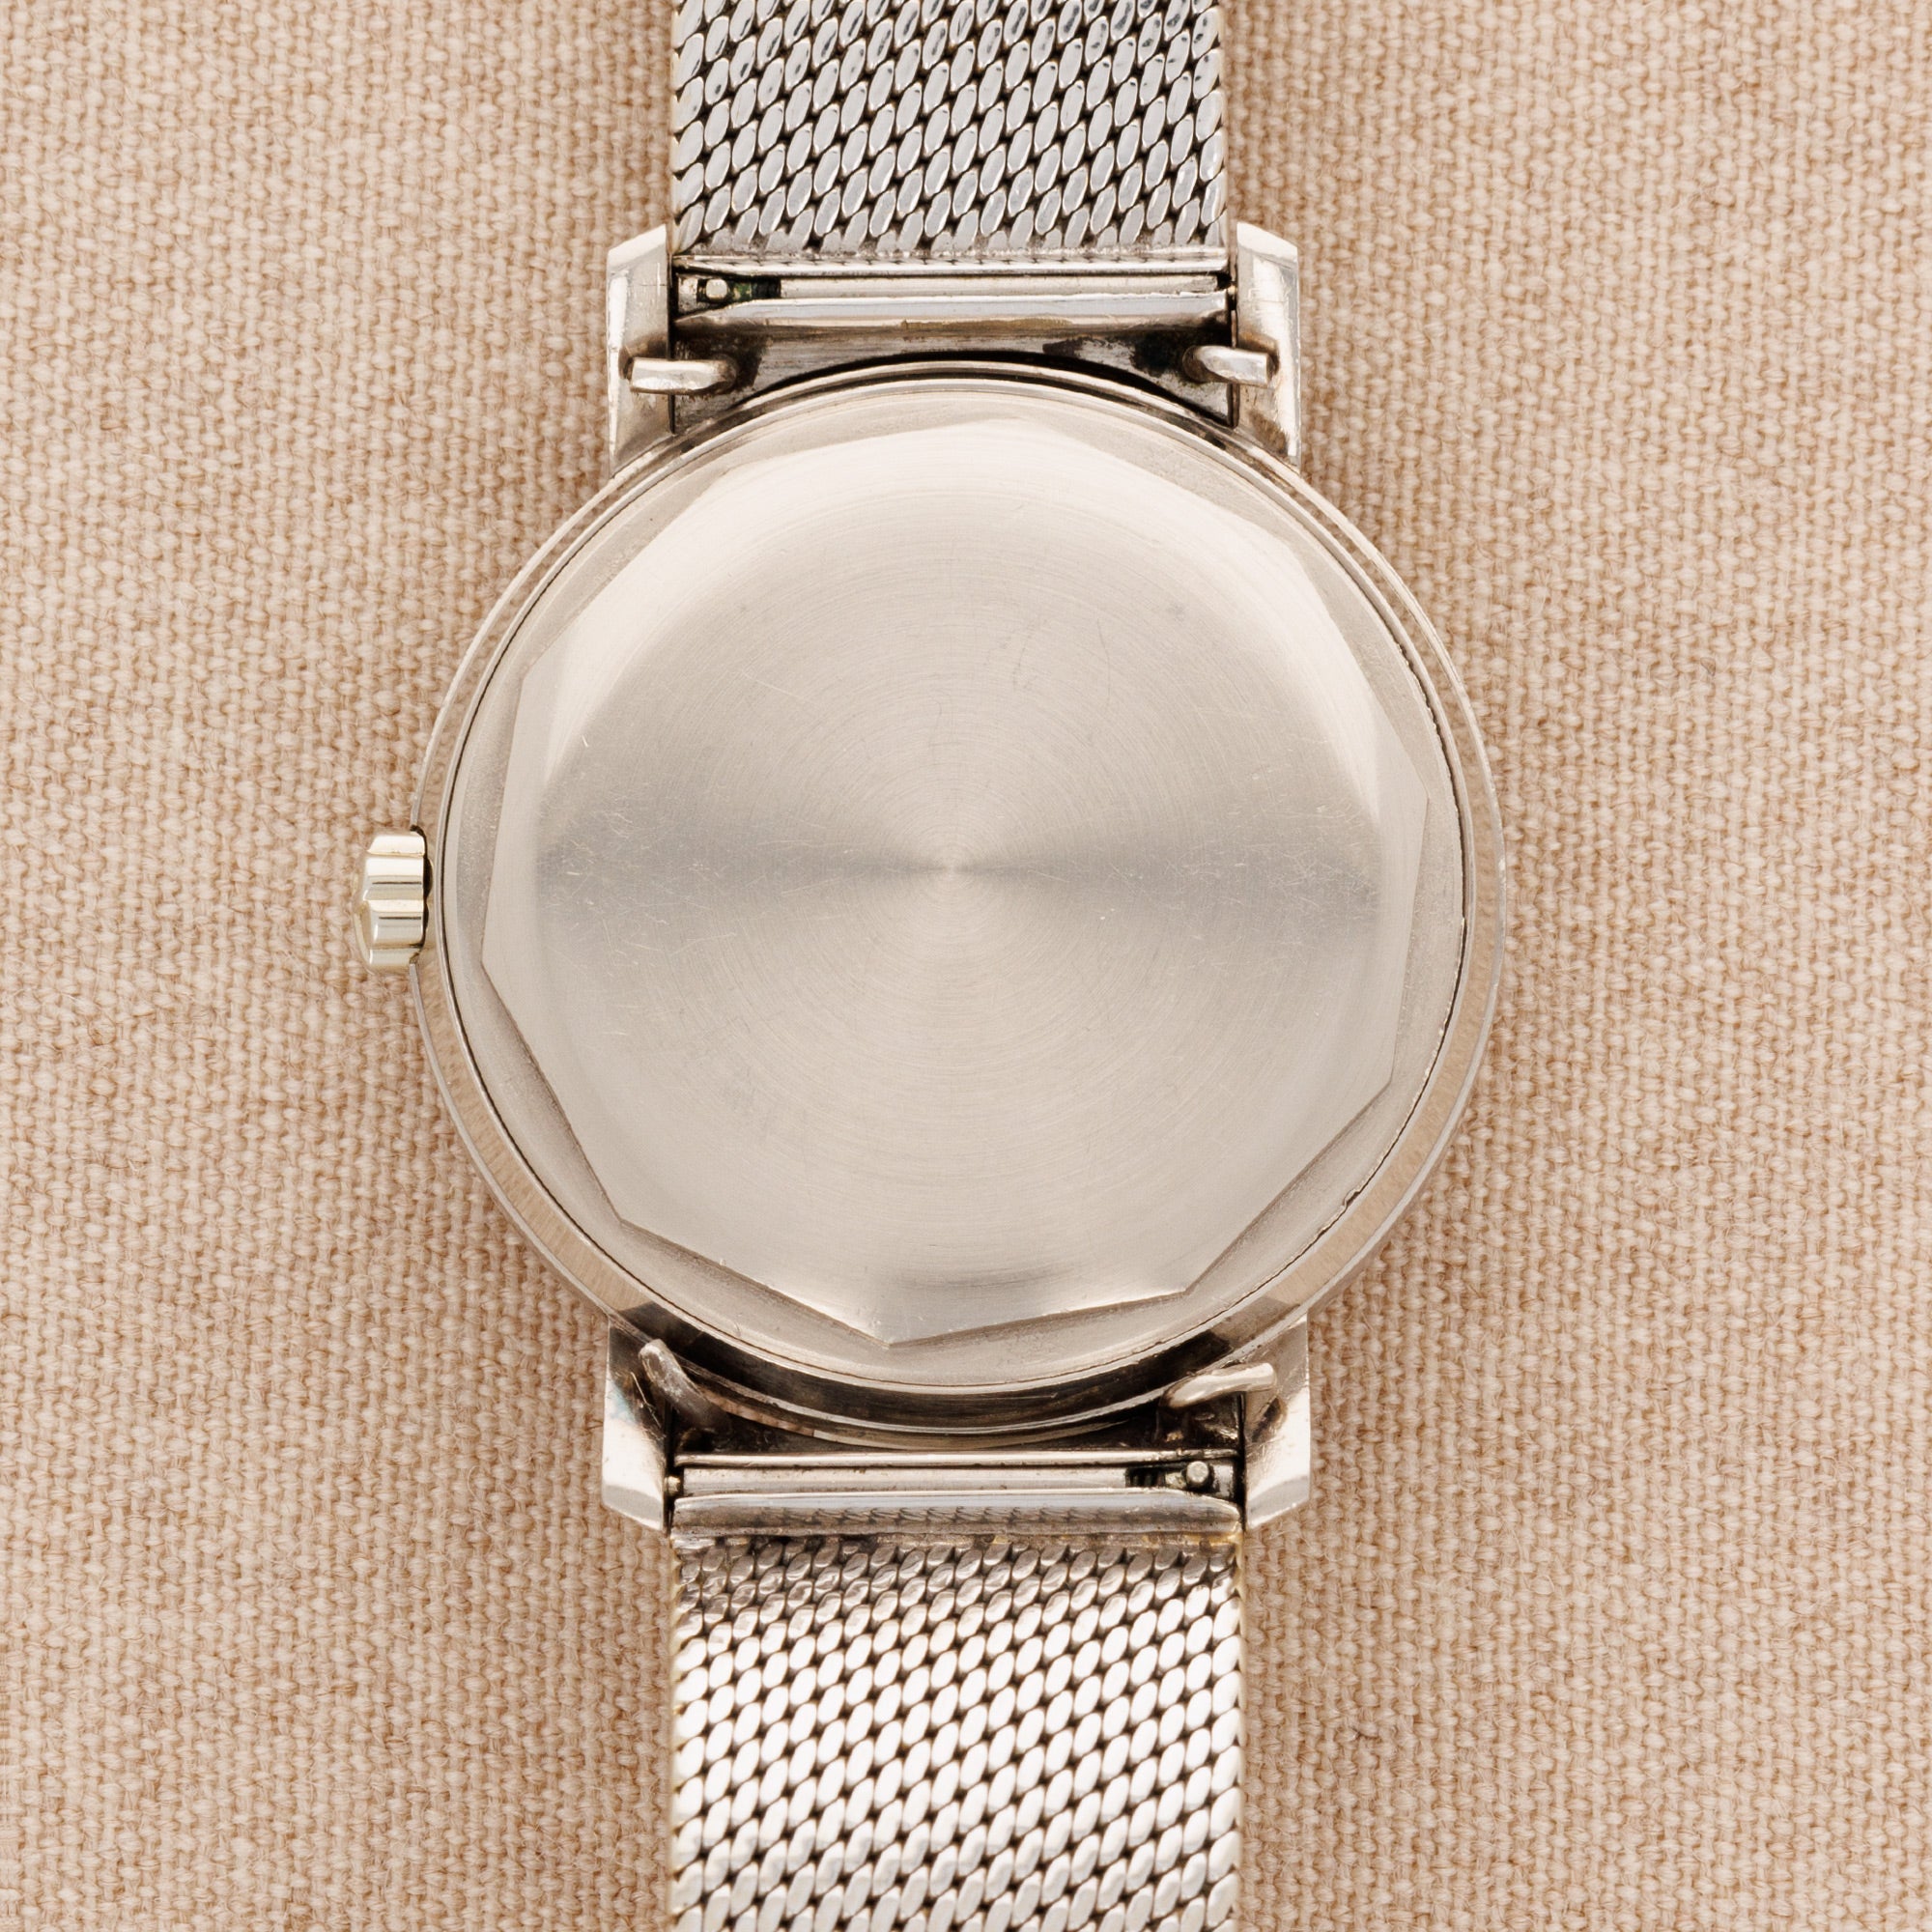 Patek Philippe - Patek Philippe White Gold Calatrava Watch Ref. 3445 on Bracelet - The Keystone Watches